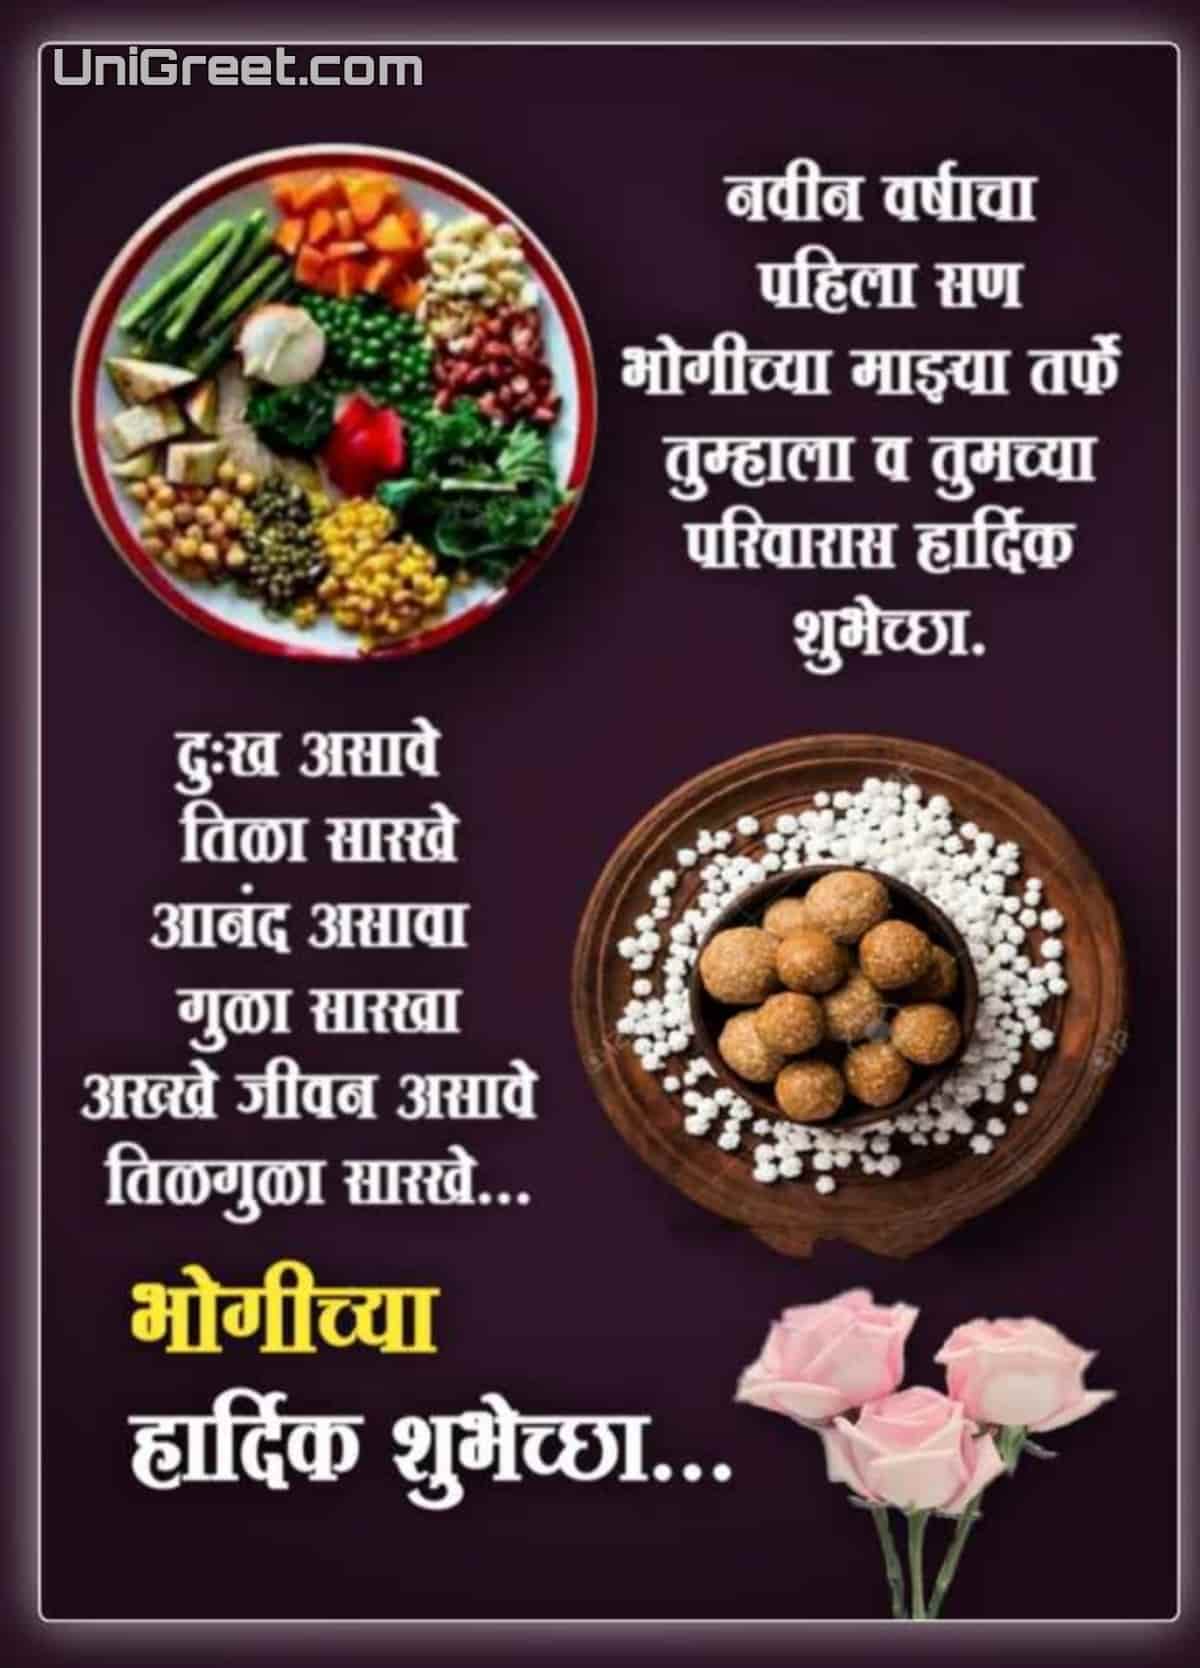 Happy bhogi wishes in marathi